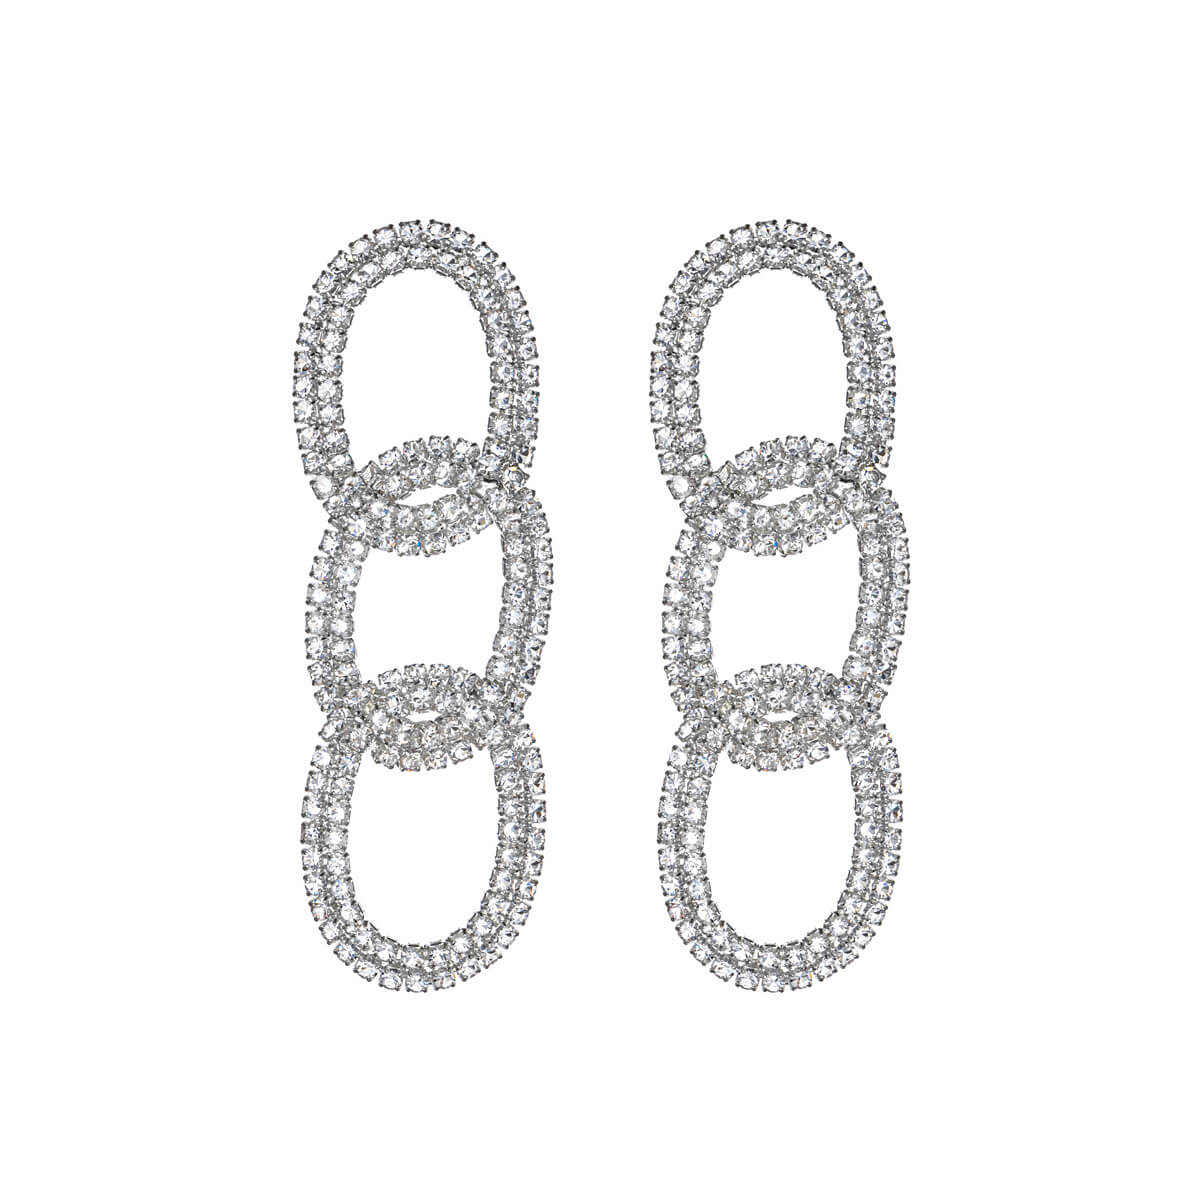 Glass-stone festive earrings with chain links